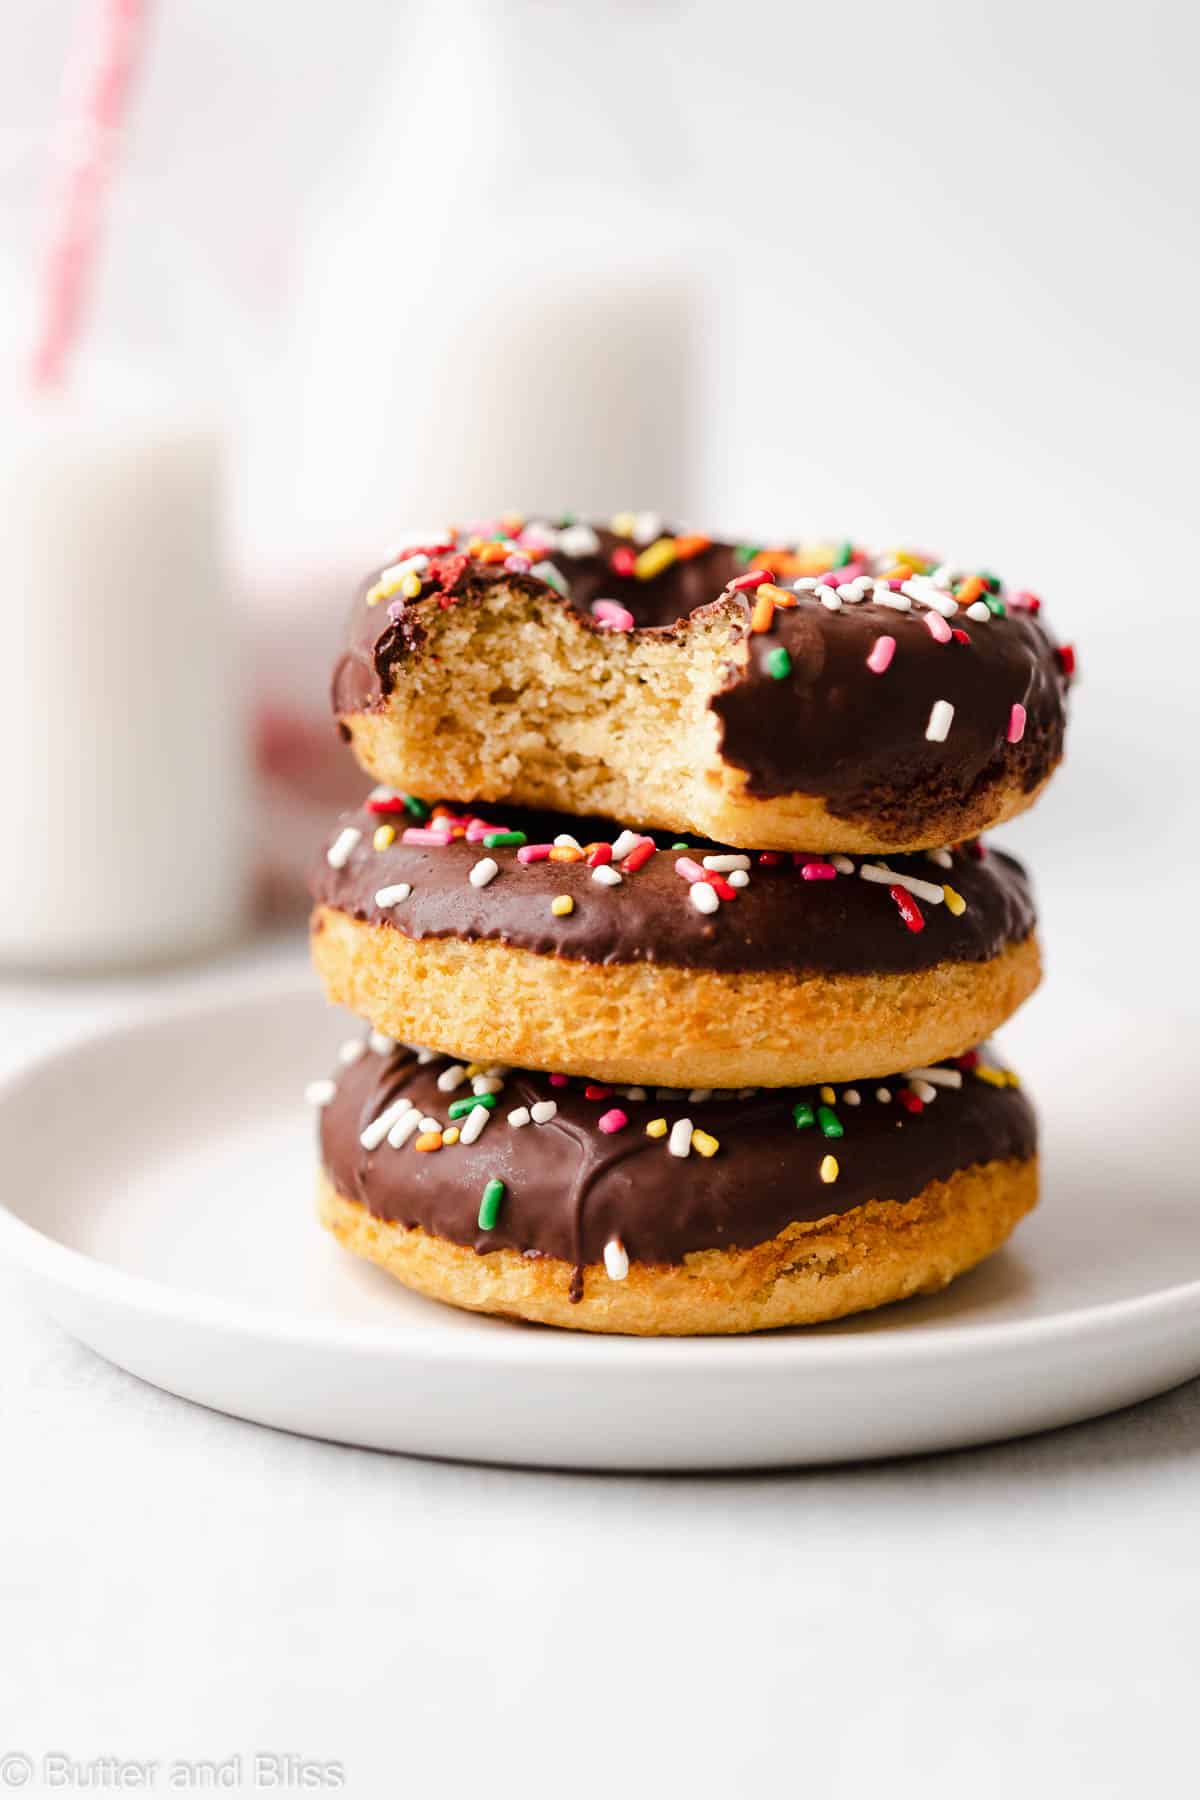 Bite shot of a gluten free vanilla donut with chocolate glaze